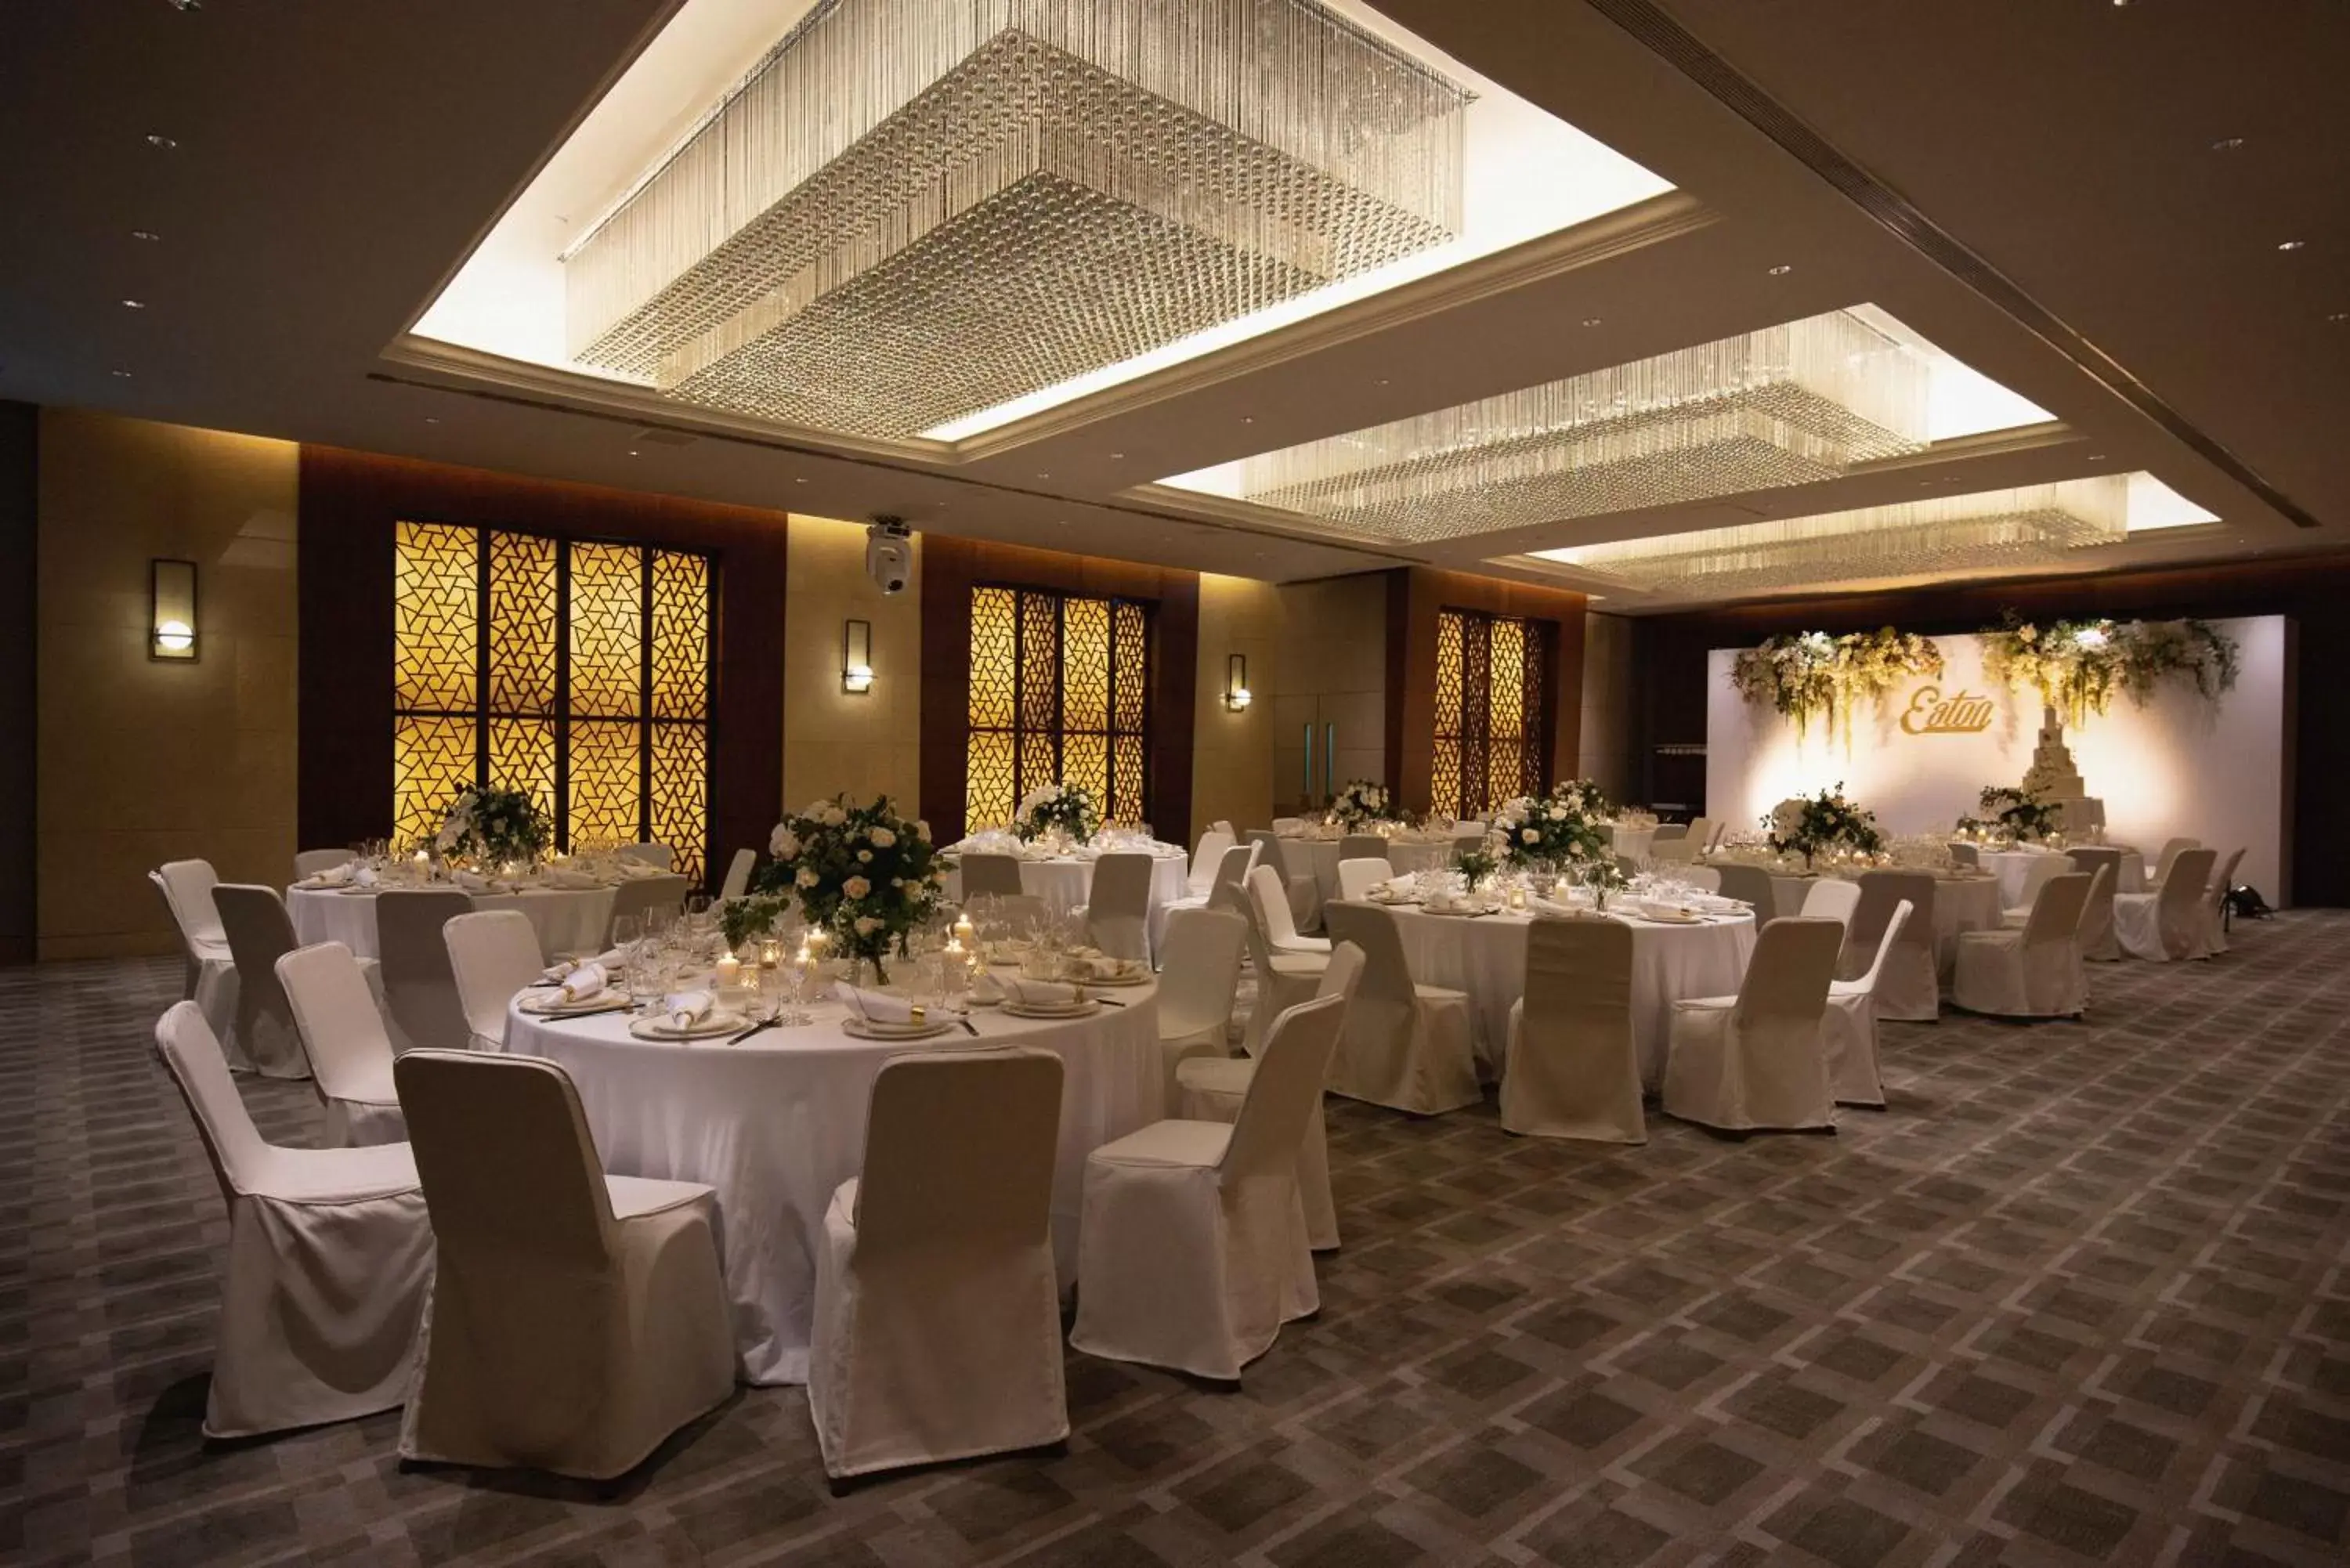 Banquet/Function facilities, Banquet Facilities in Eaton HK